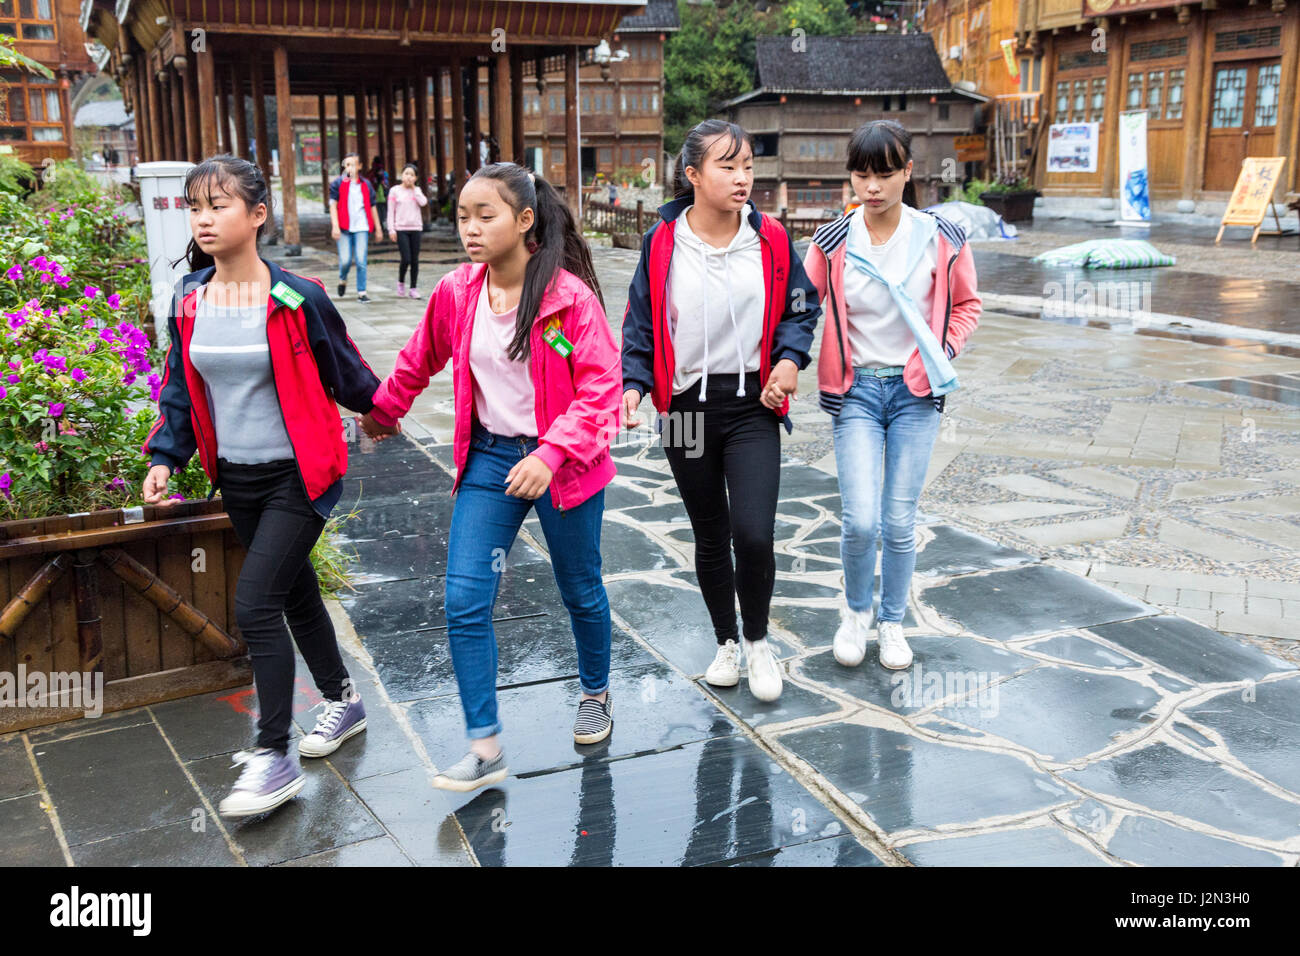 Girls in china village List of